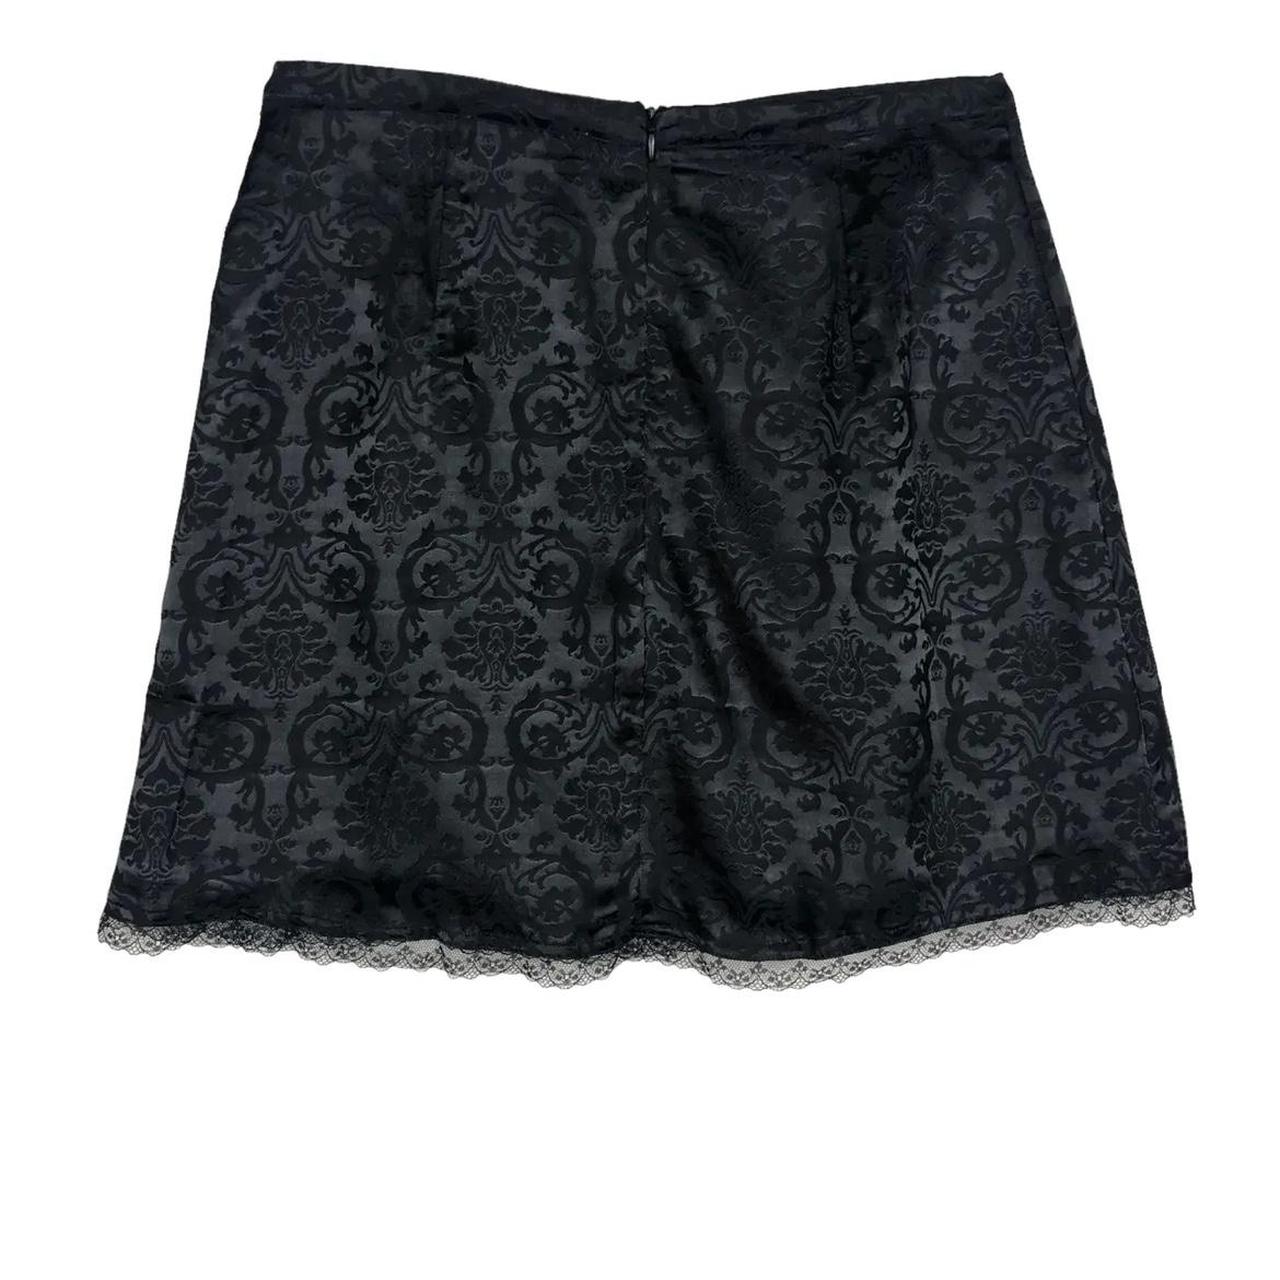 Black satin lace mini slip skirt - size 12 from... - Depop